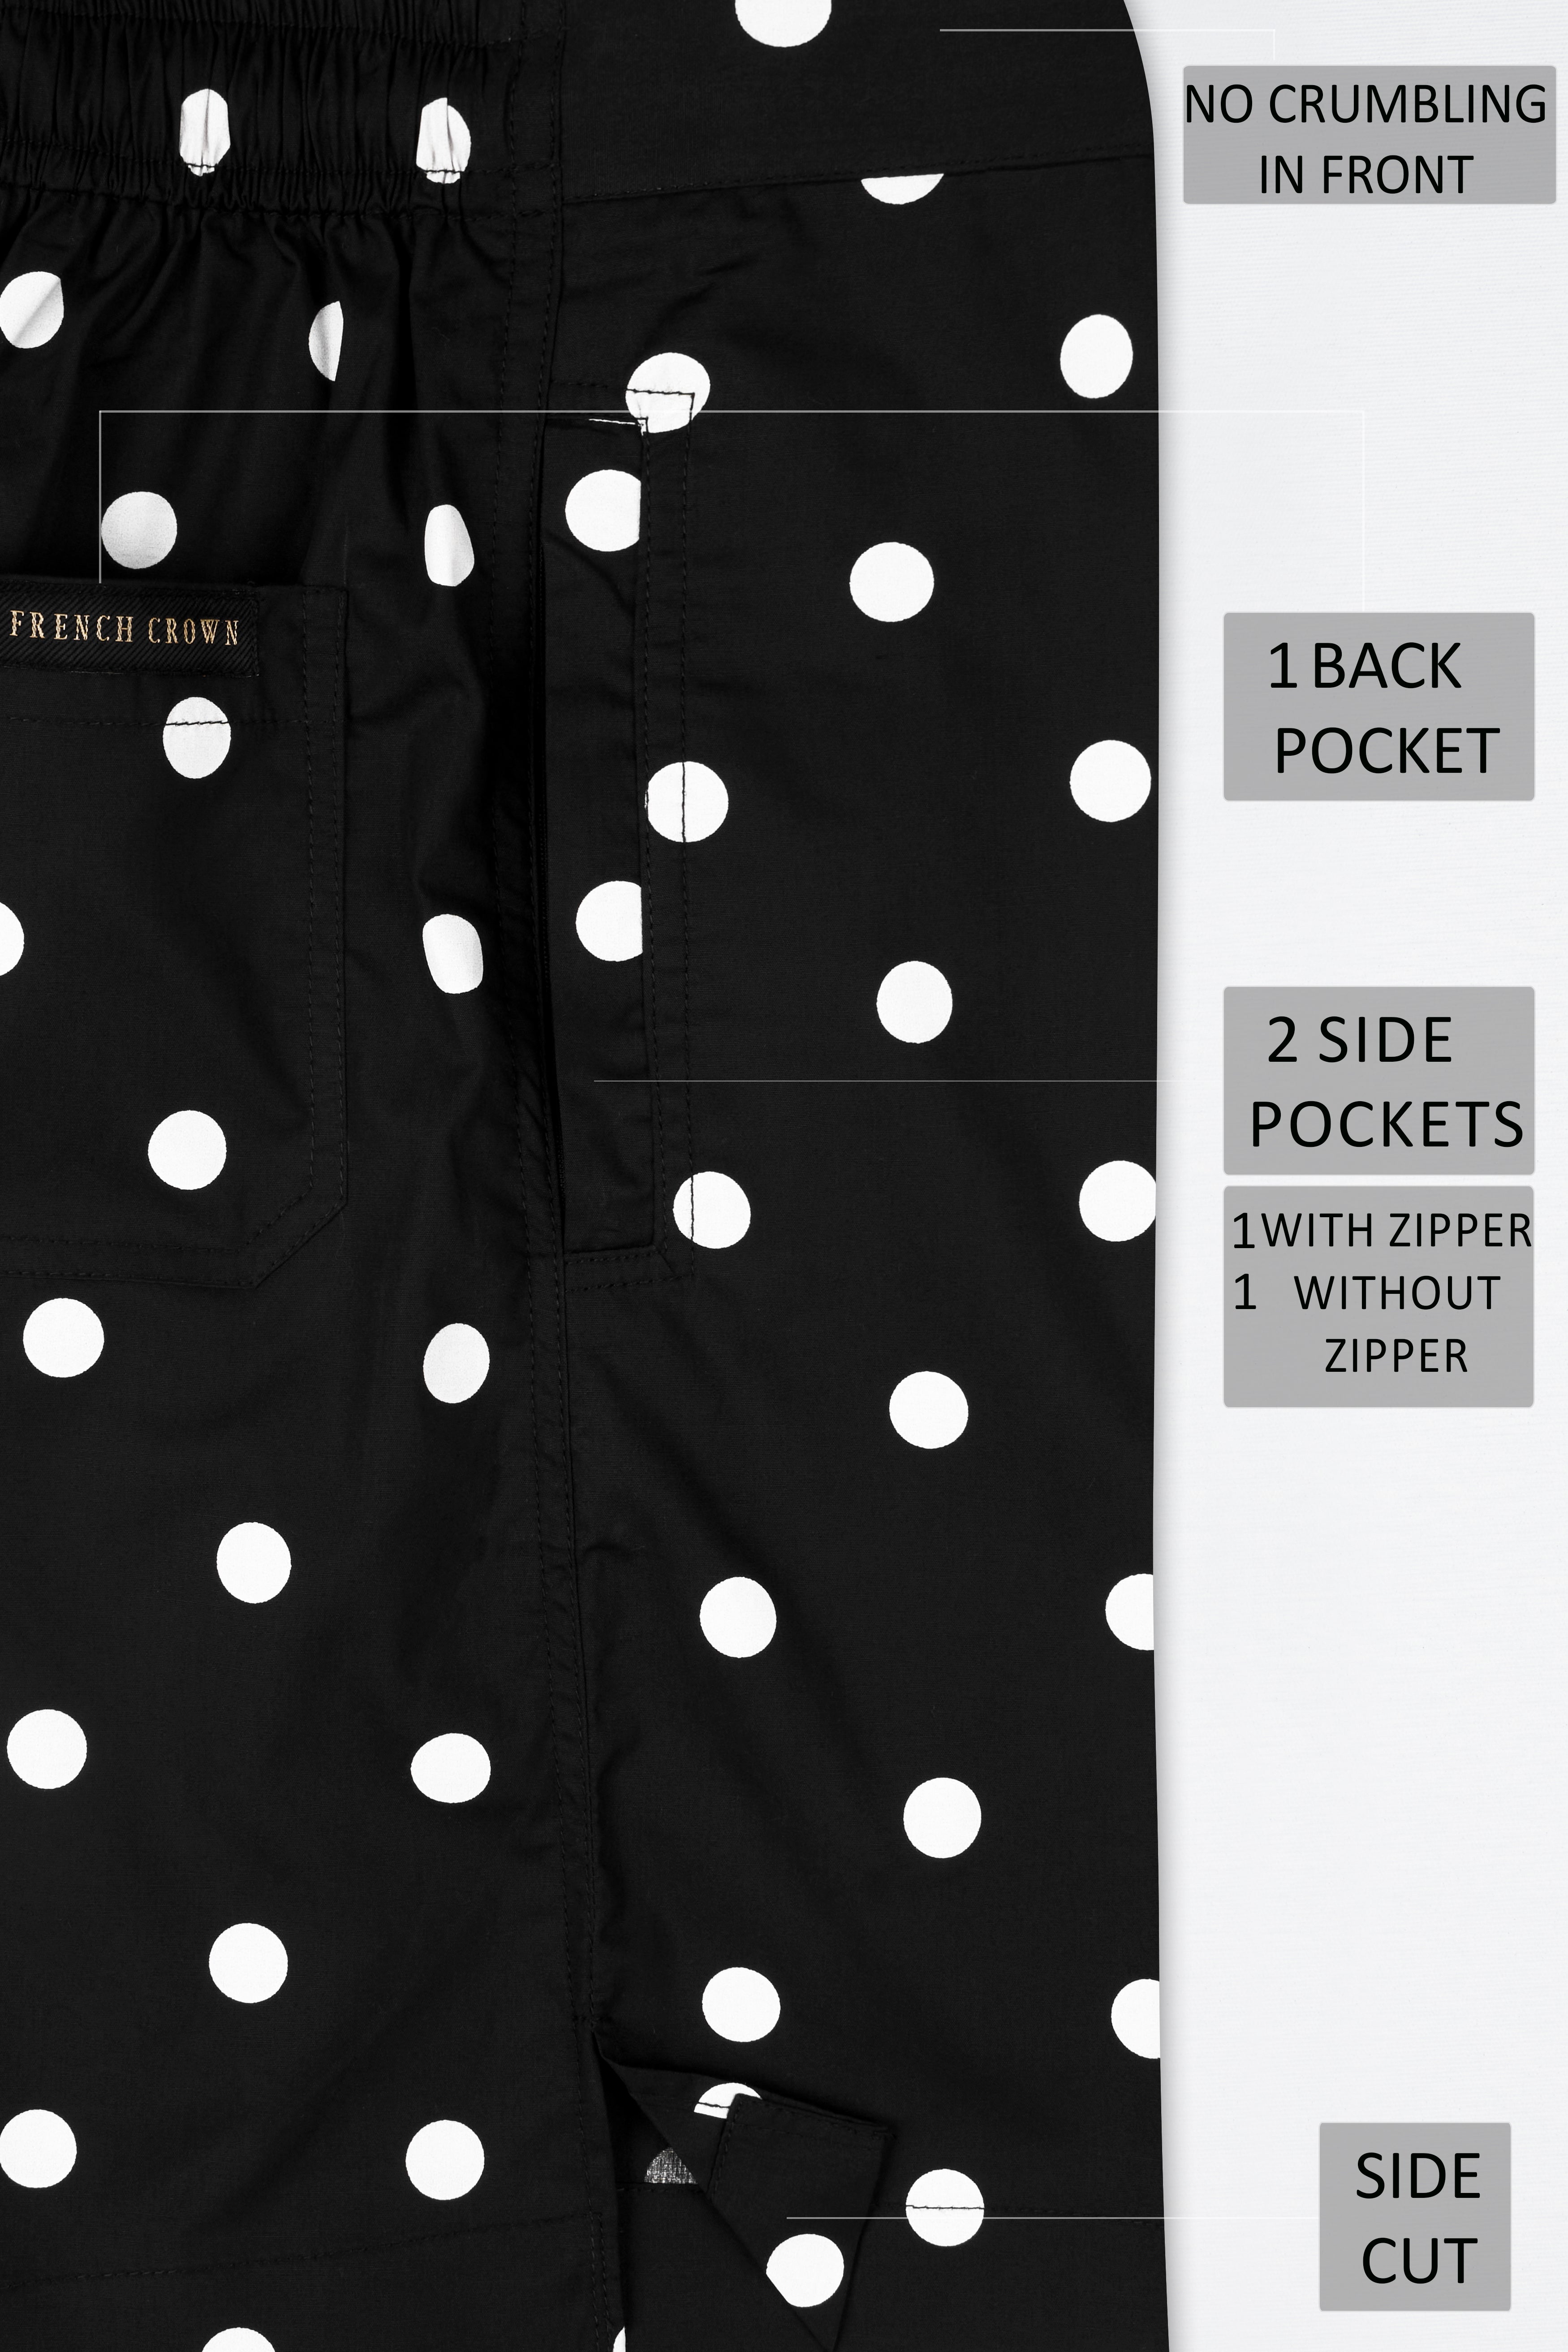 Jade Black and White Polka Dotted Premium Cotton Shorts SR286-28, SR286-30, SR286-32, SR286-34, SR286-36, SR286-38, SR286-40, SR286-42, SR286-44